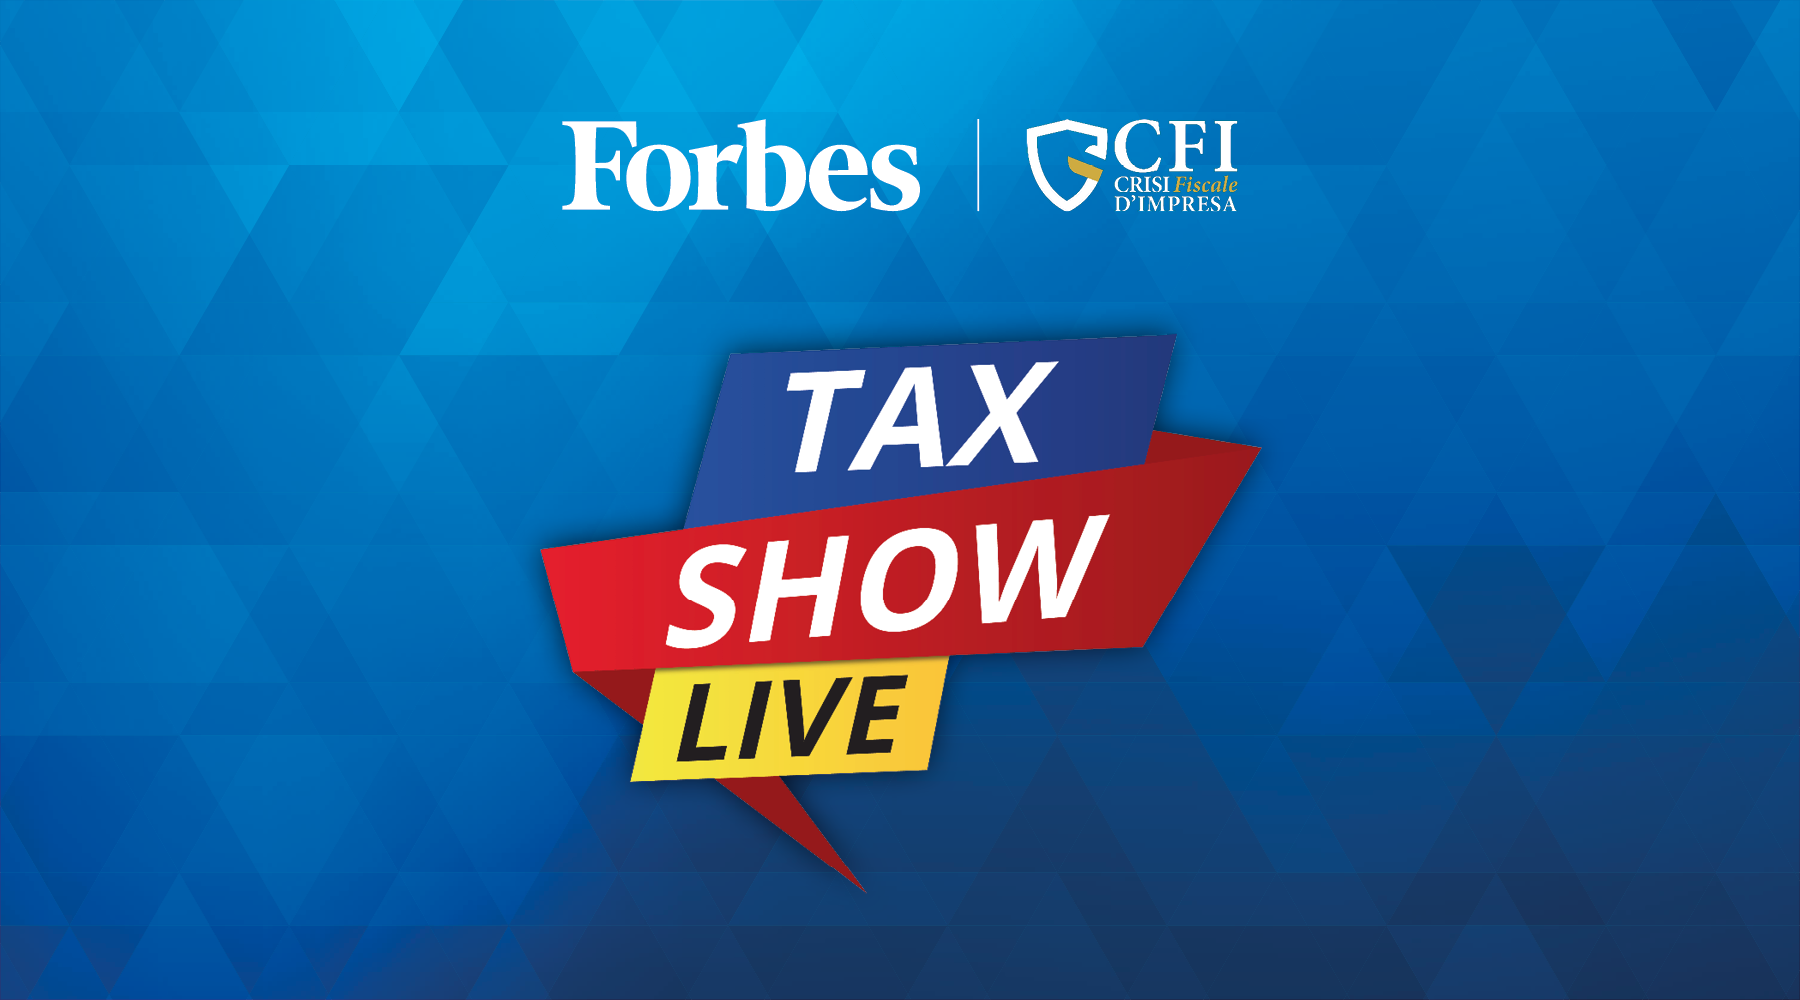 Tax Show Live